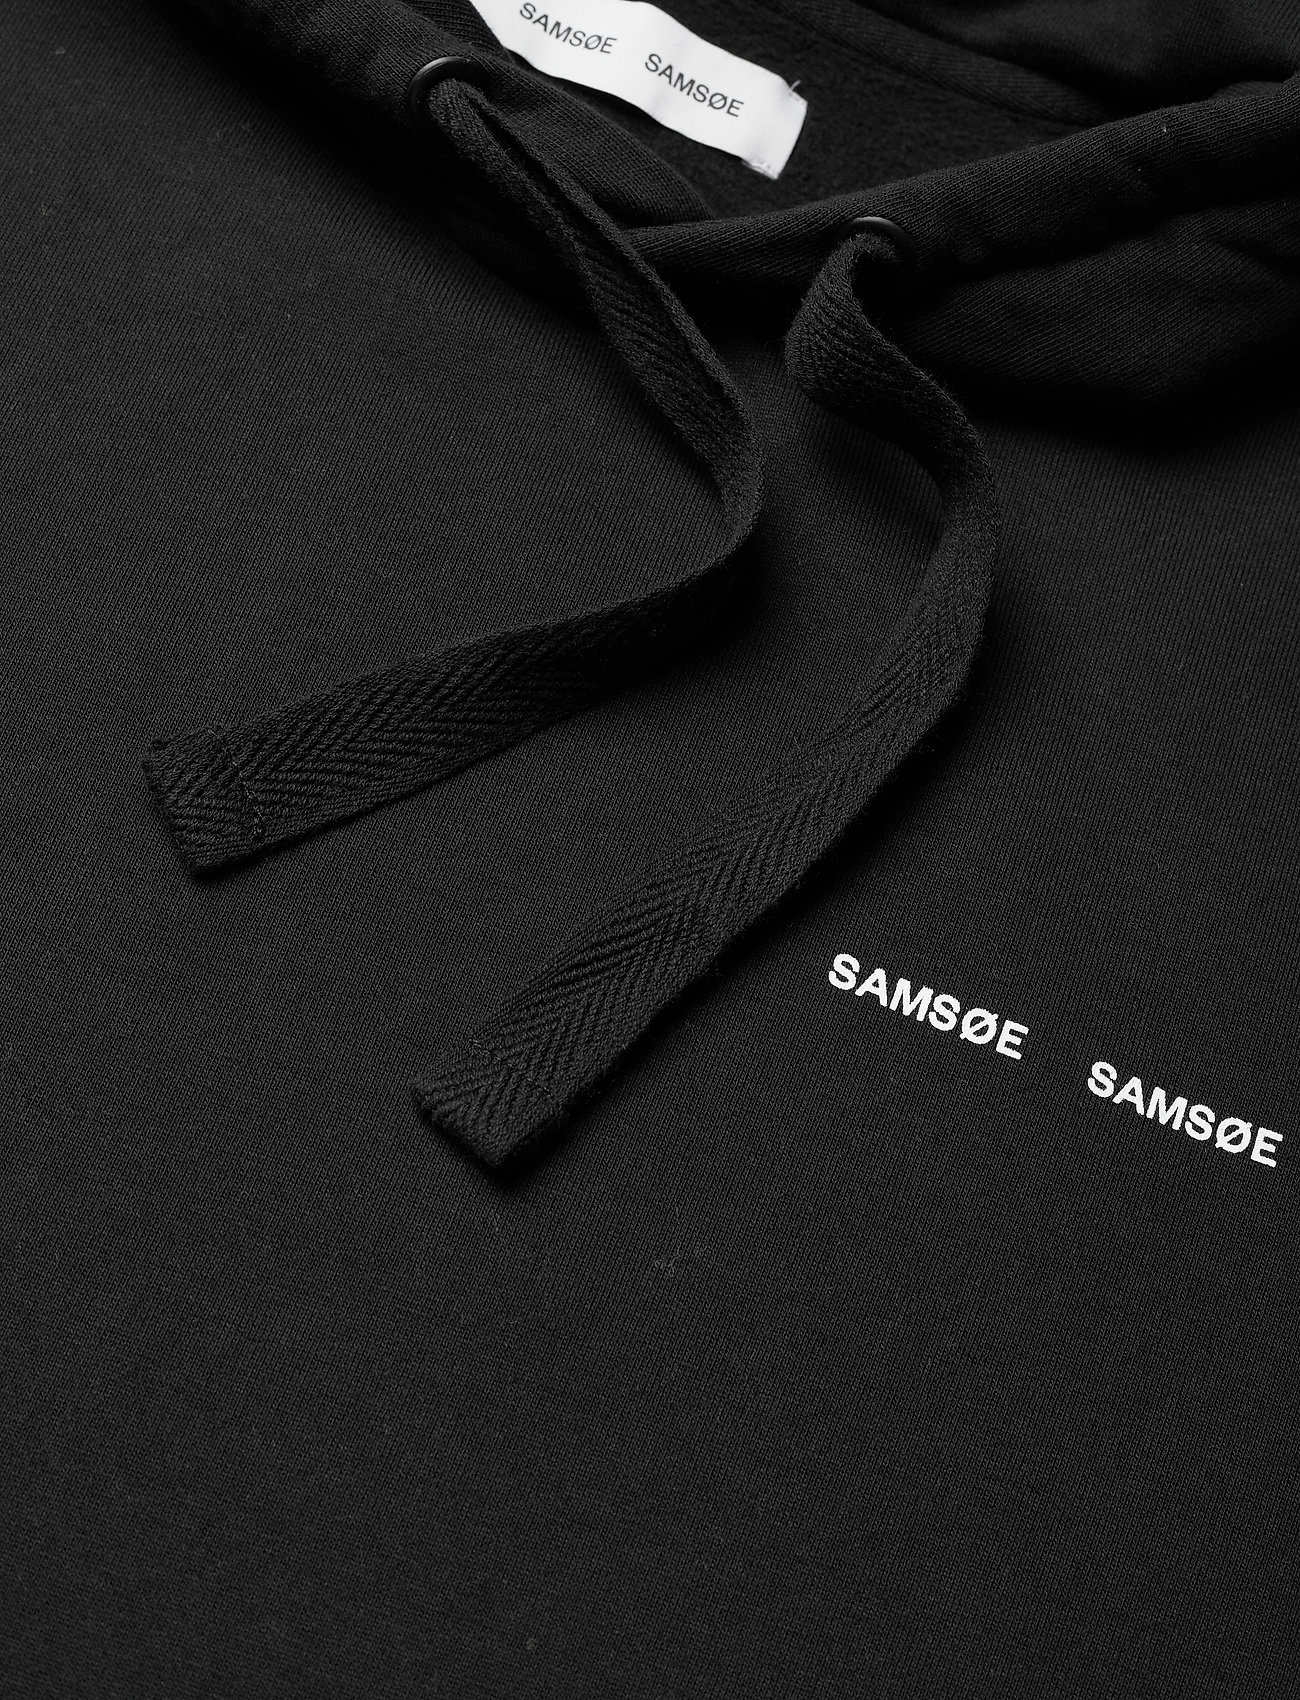 Samsøe Samsøe - Norsbro hoodie 11720 - nordic style - black - 2